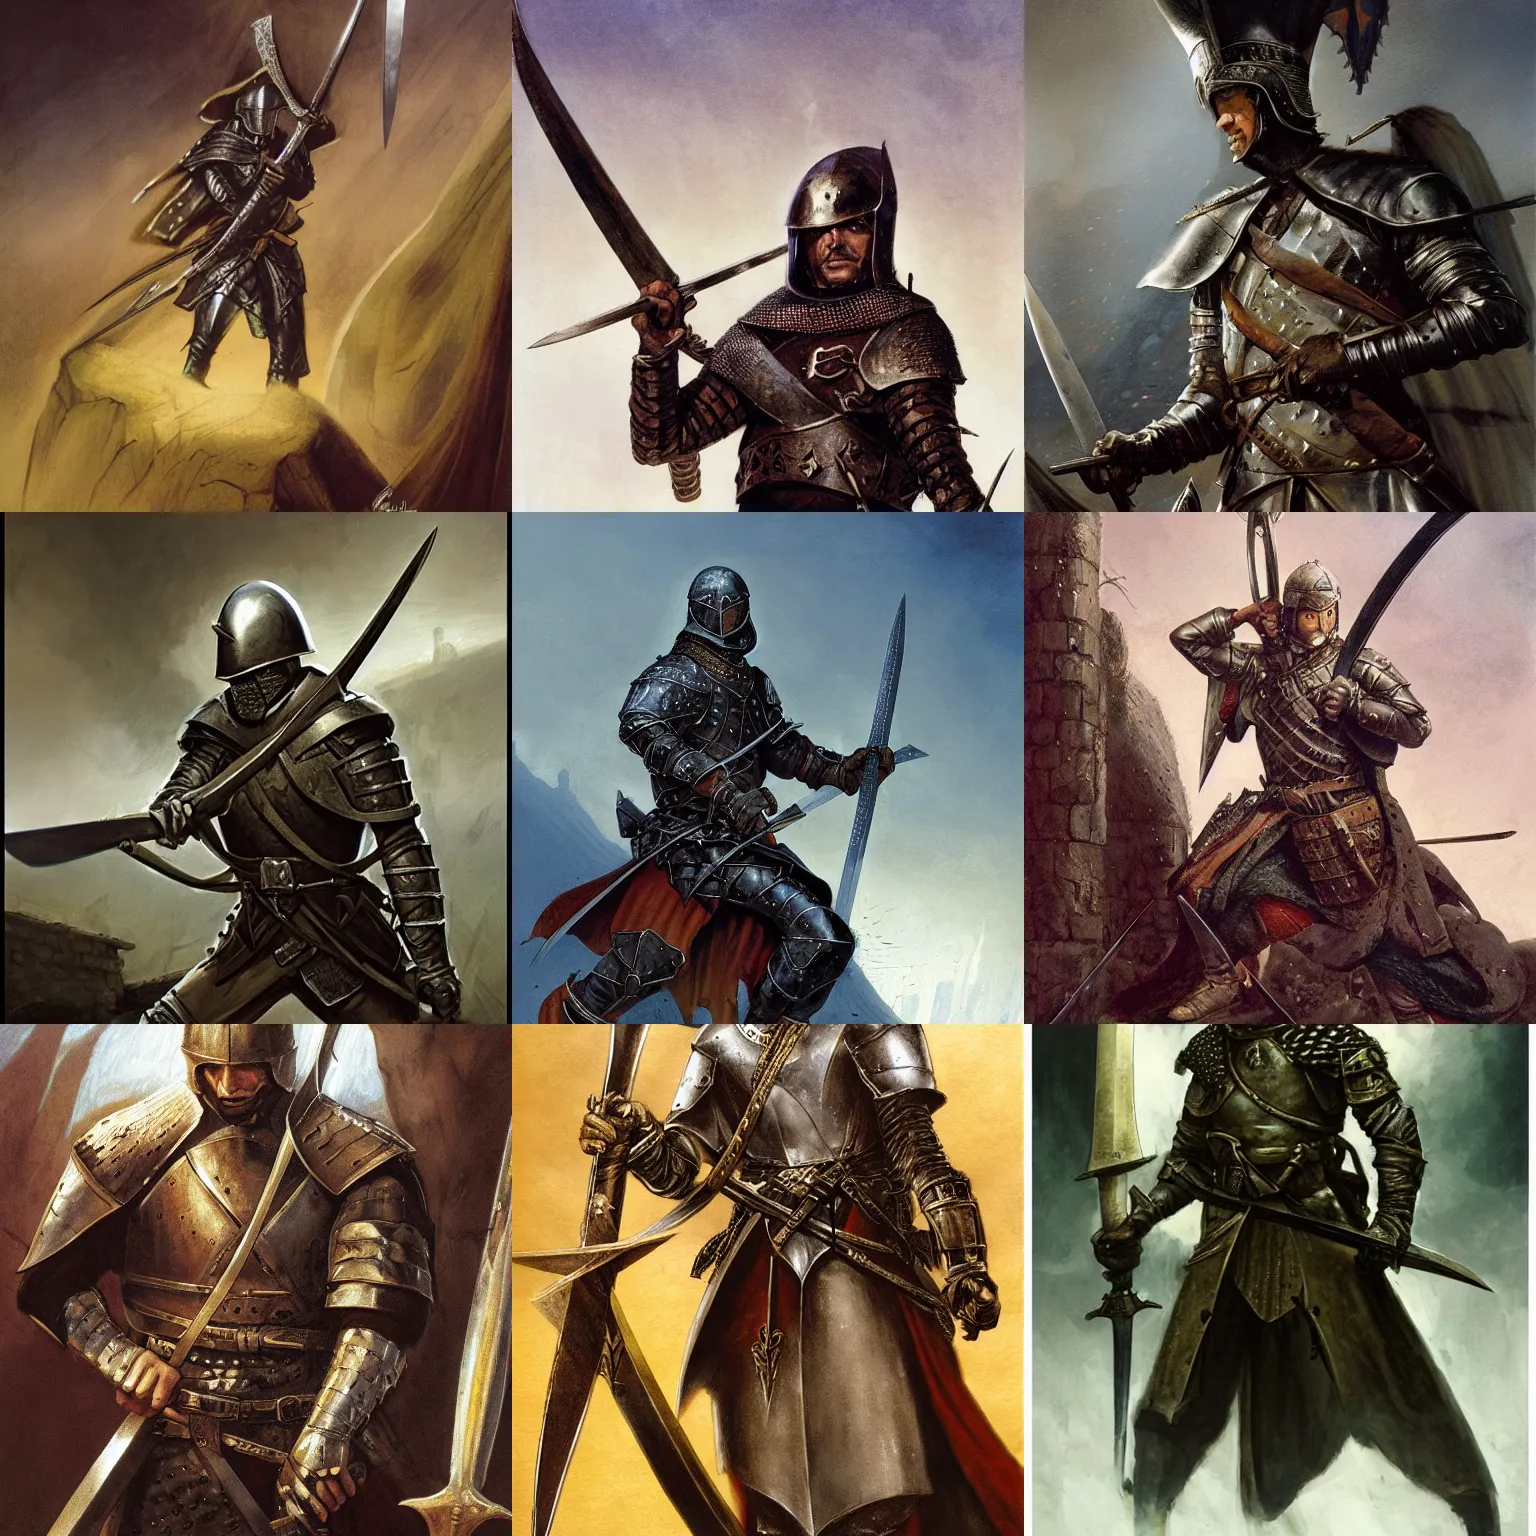 Prompt: medieval soldier holding sword, close - up, mtg, d & d, rutkowski, john howe, aleksi briclot